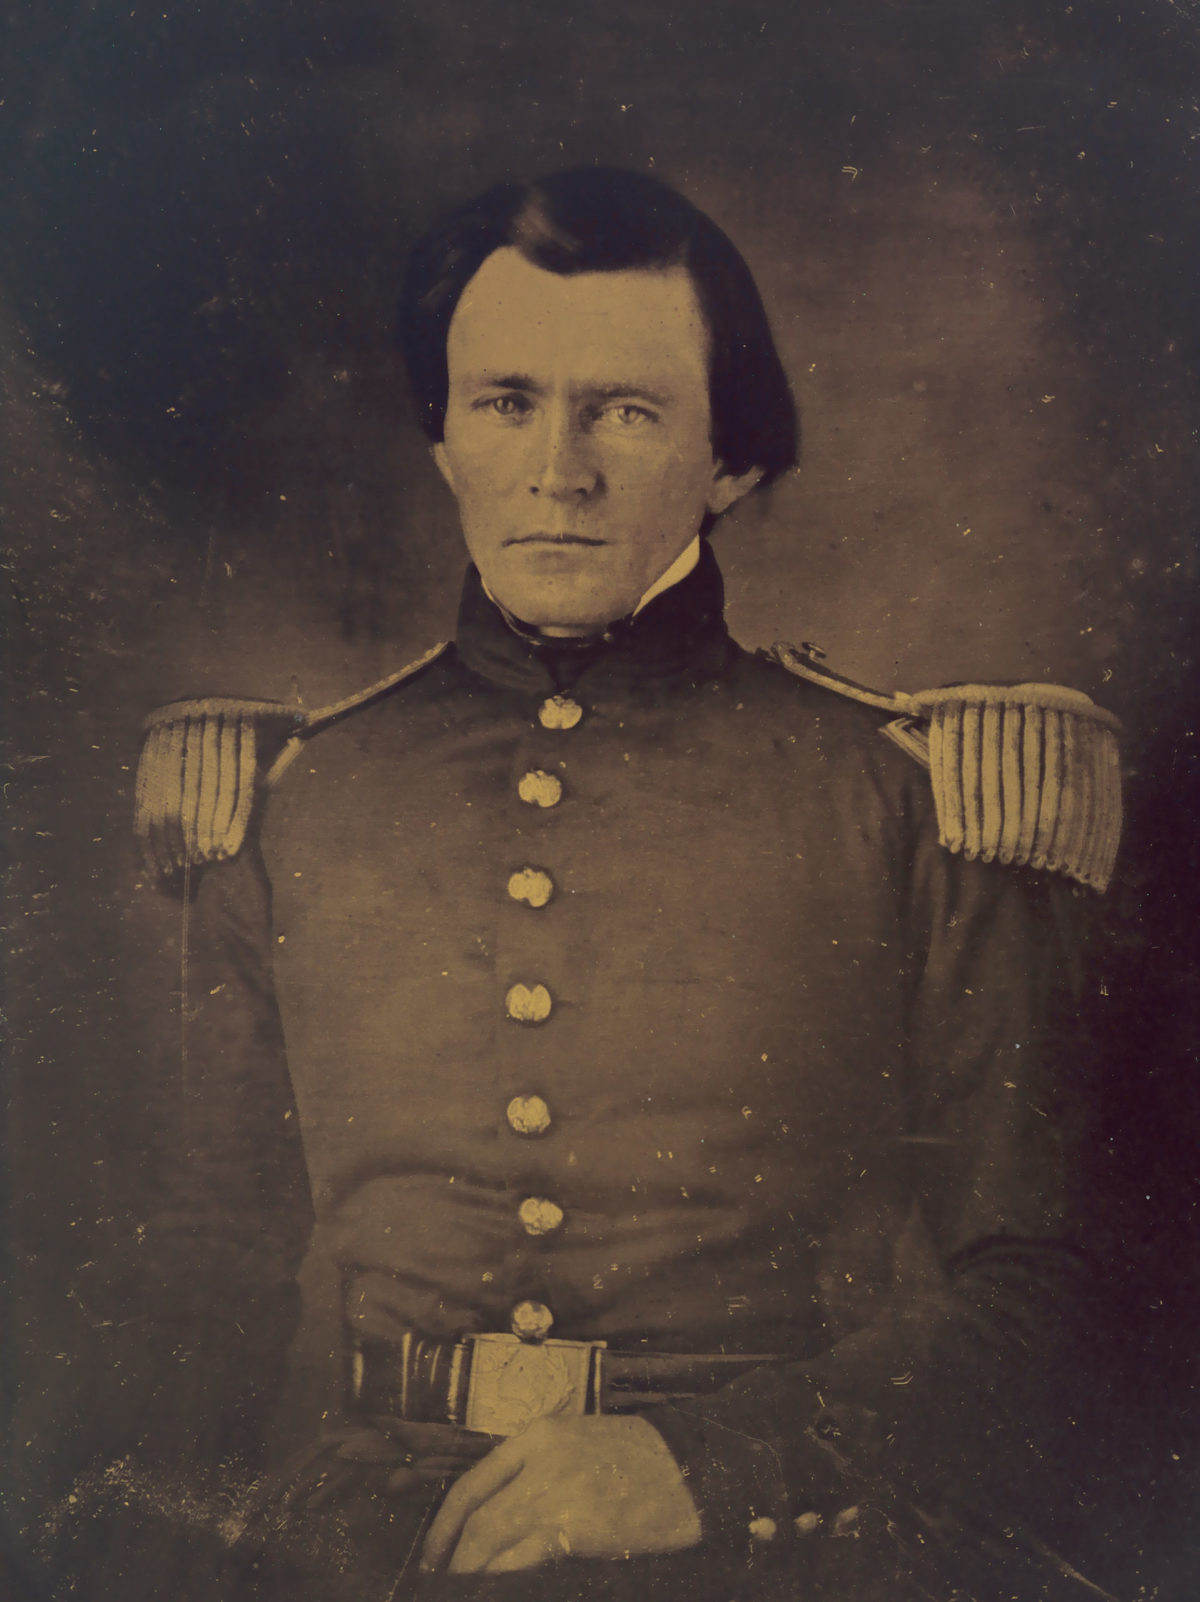 Ulysses S. Grant in military uniform, 1847